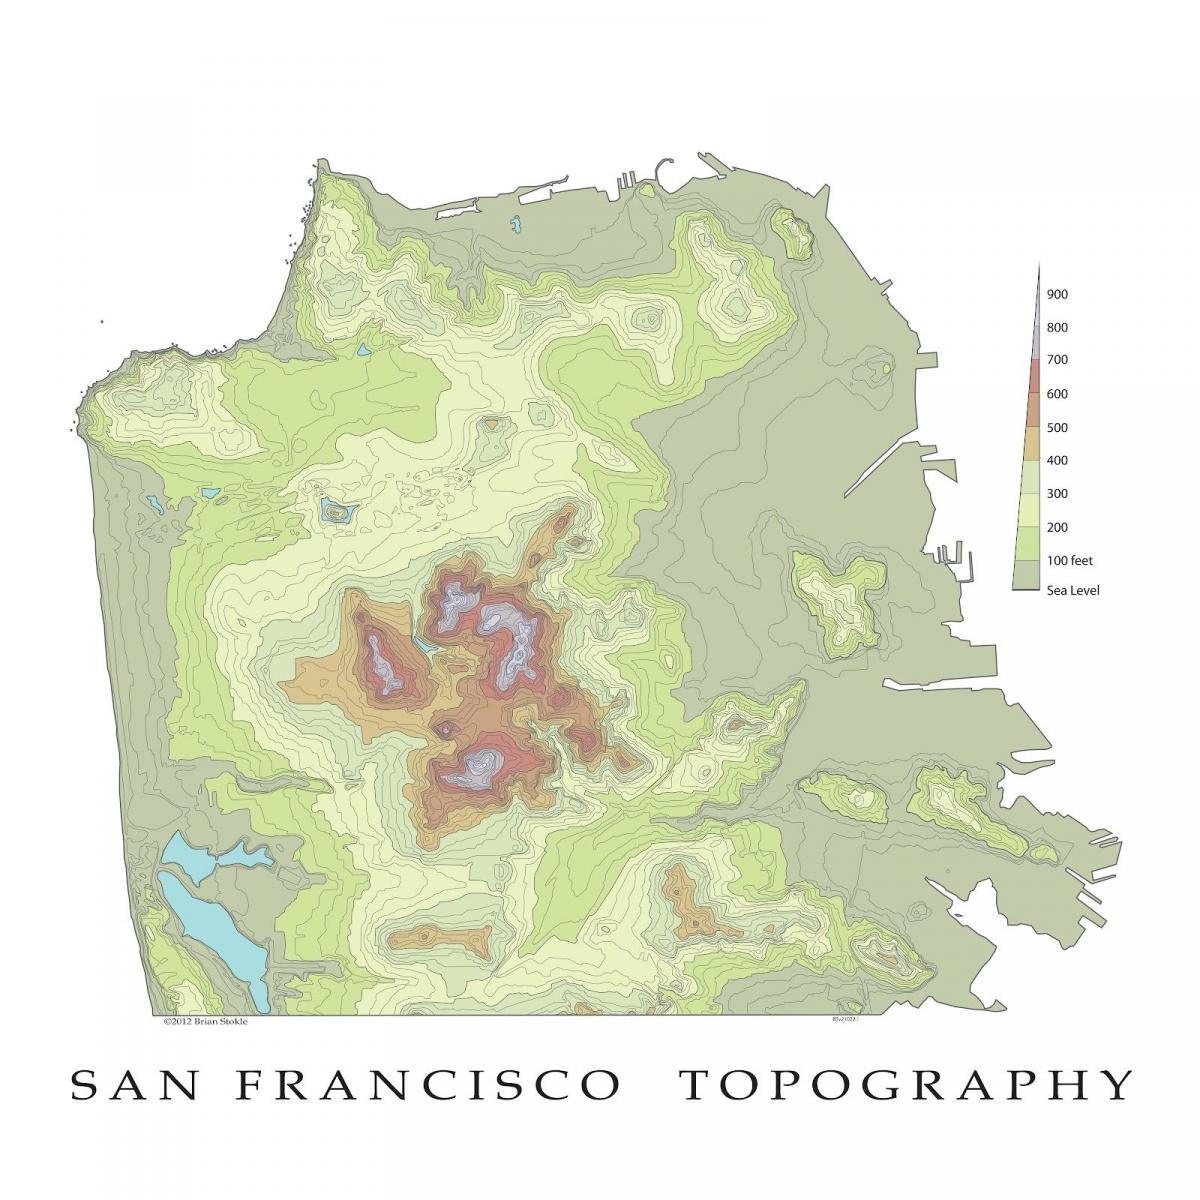 San Francisco peta topografi